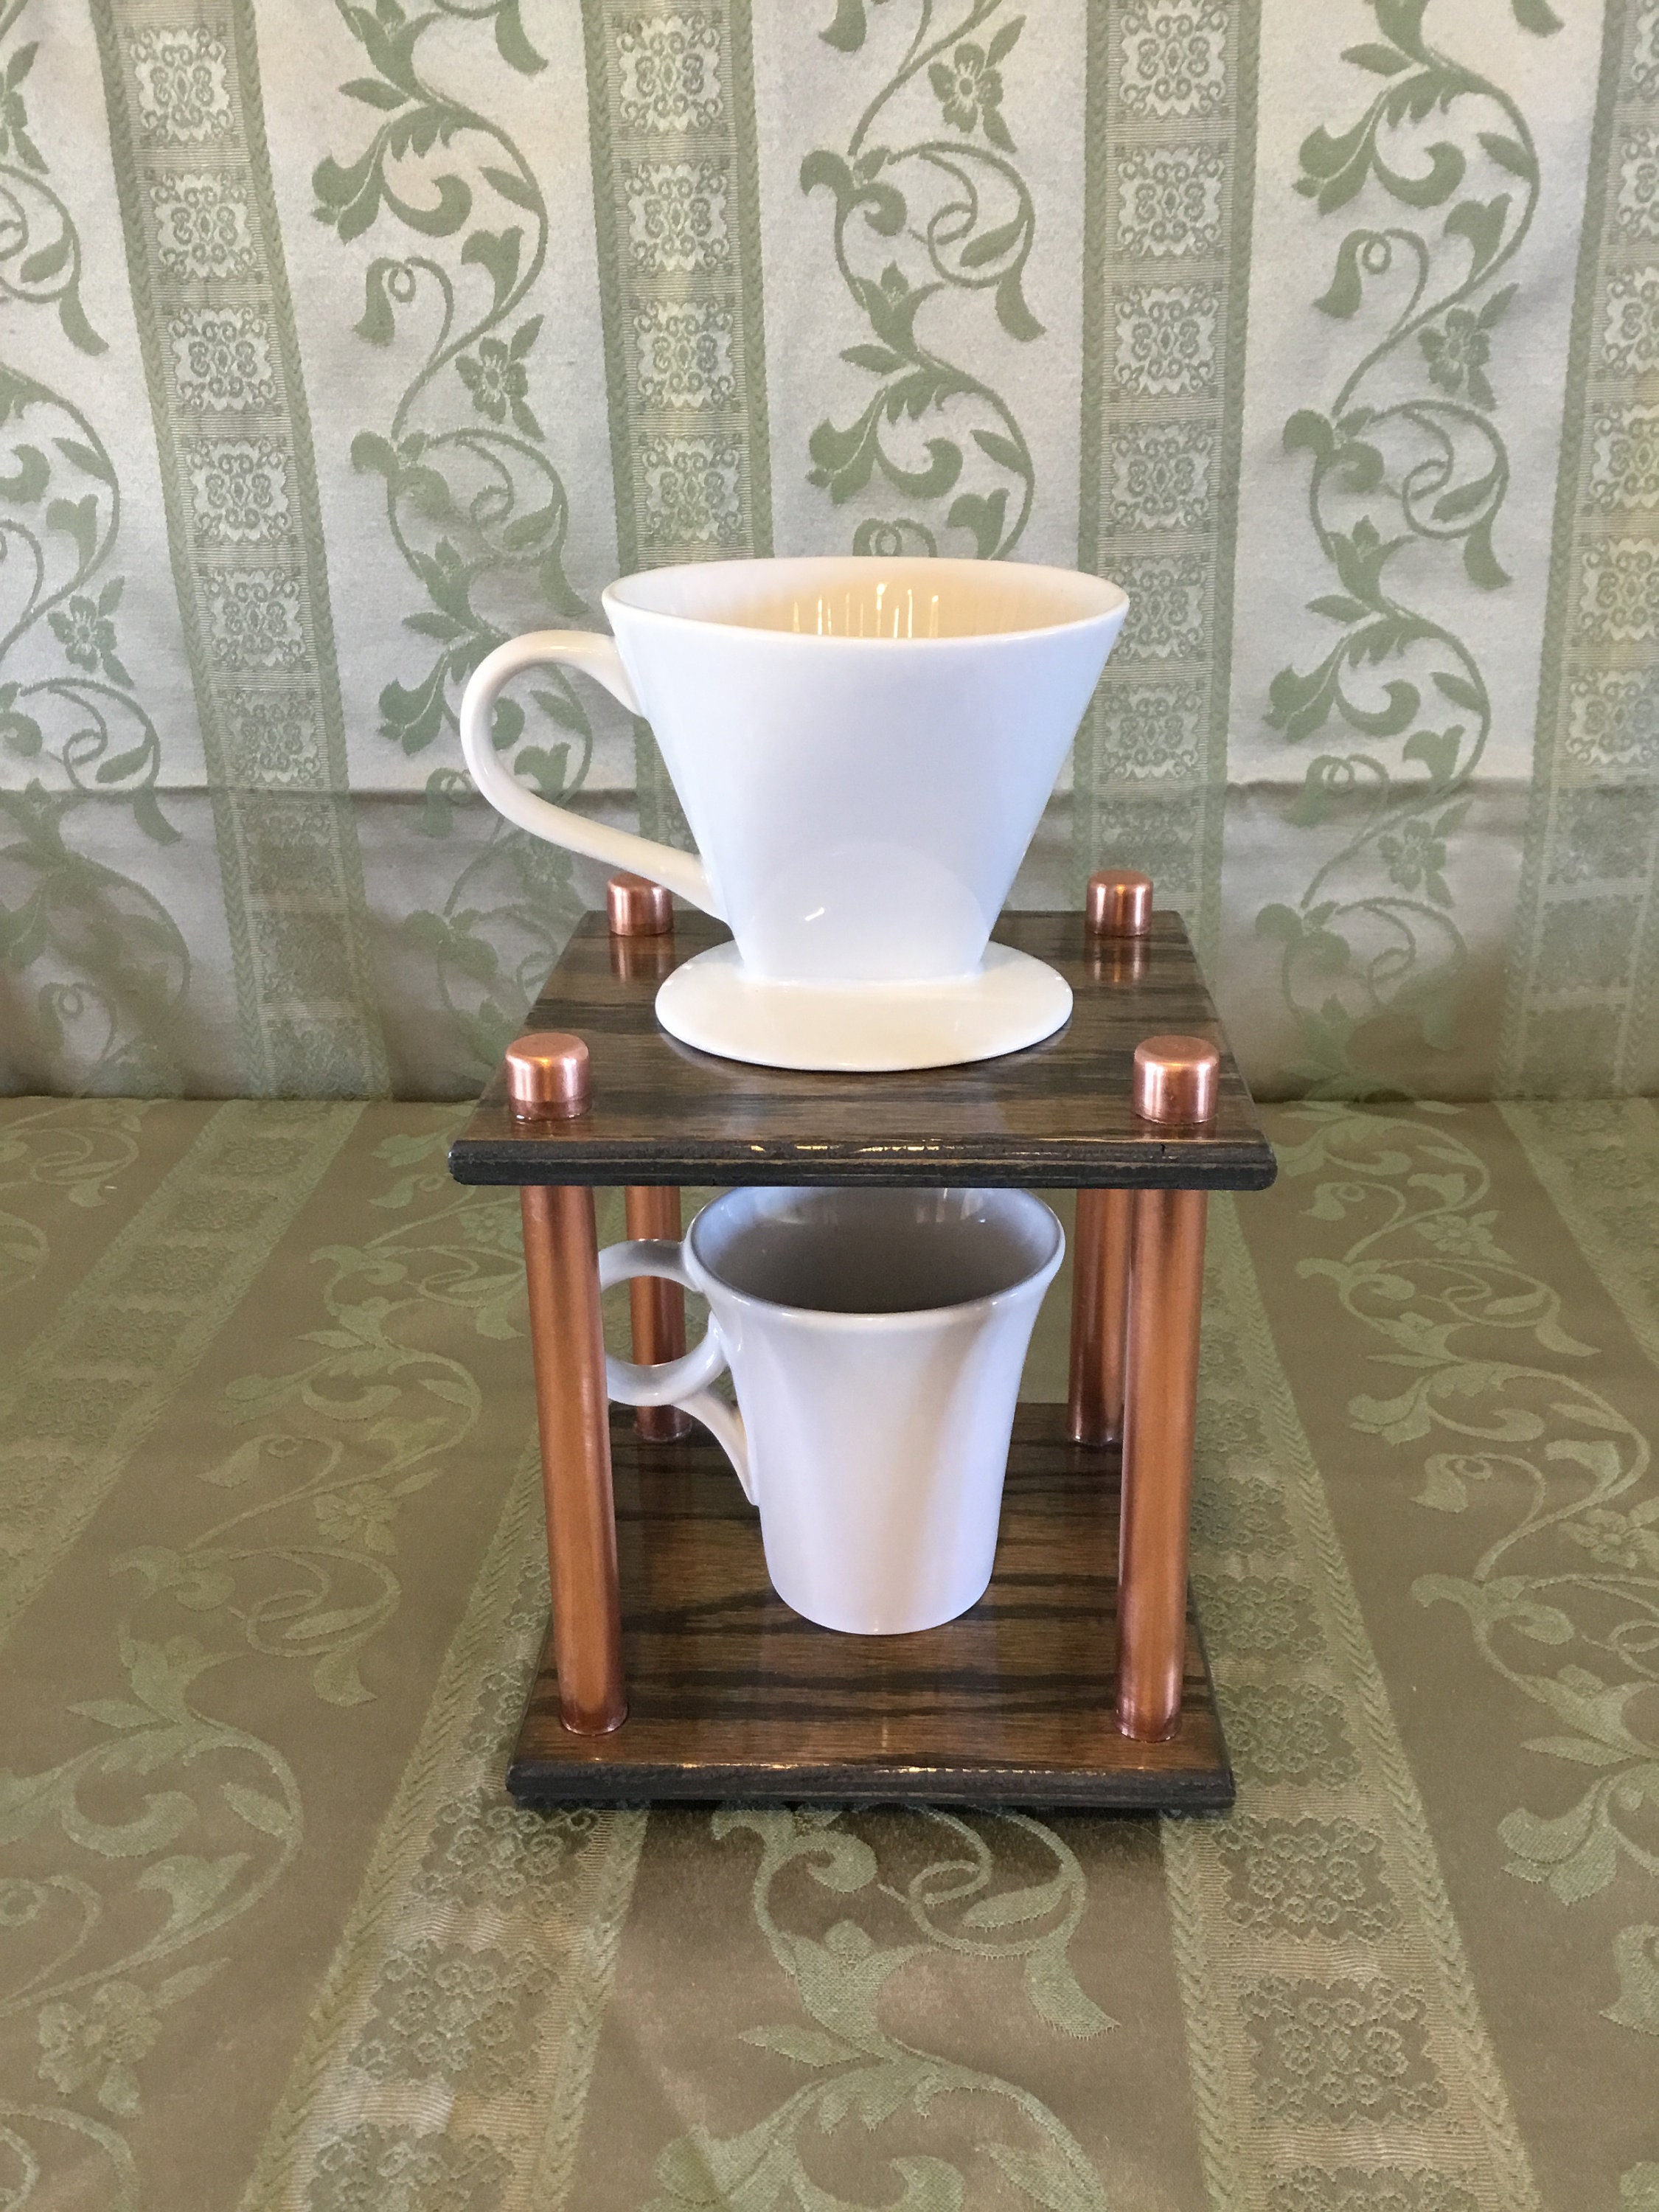 Custom Pour-over coffee stand for v60 x Conscious Bean